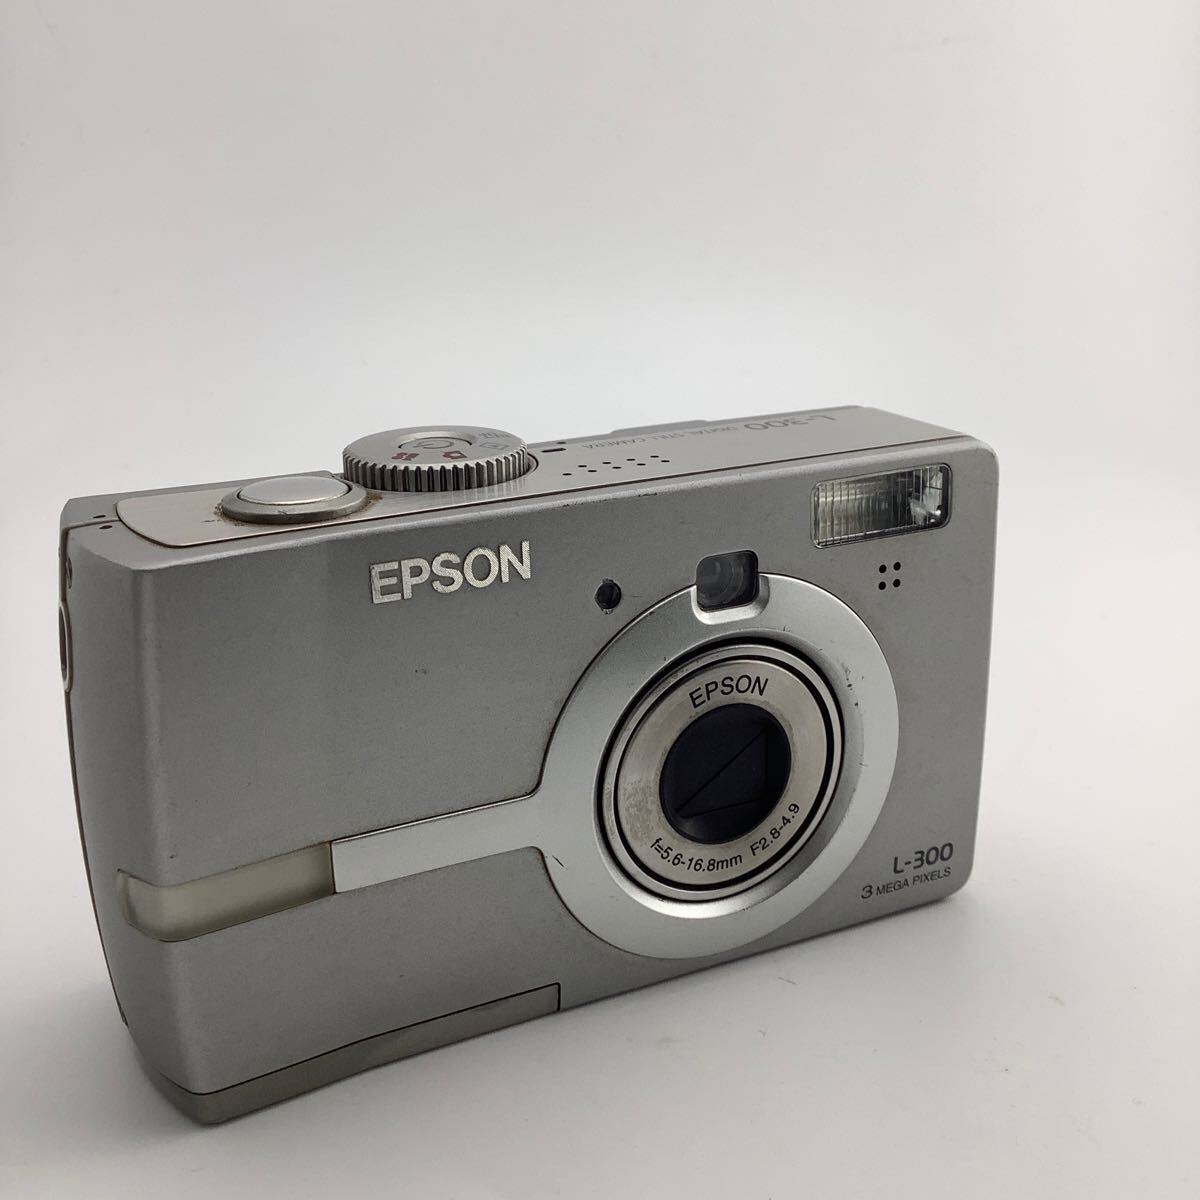 EPSON デジタルカメラ L-300 シルバーボディー f=5.6-16.8㎜ F2.8-4.9 エプソン 3MEGA PIXELS [k8209-C16]の画像1